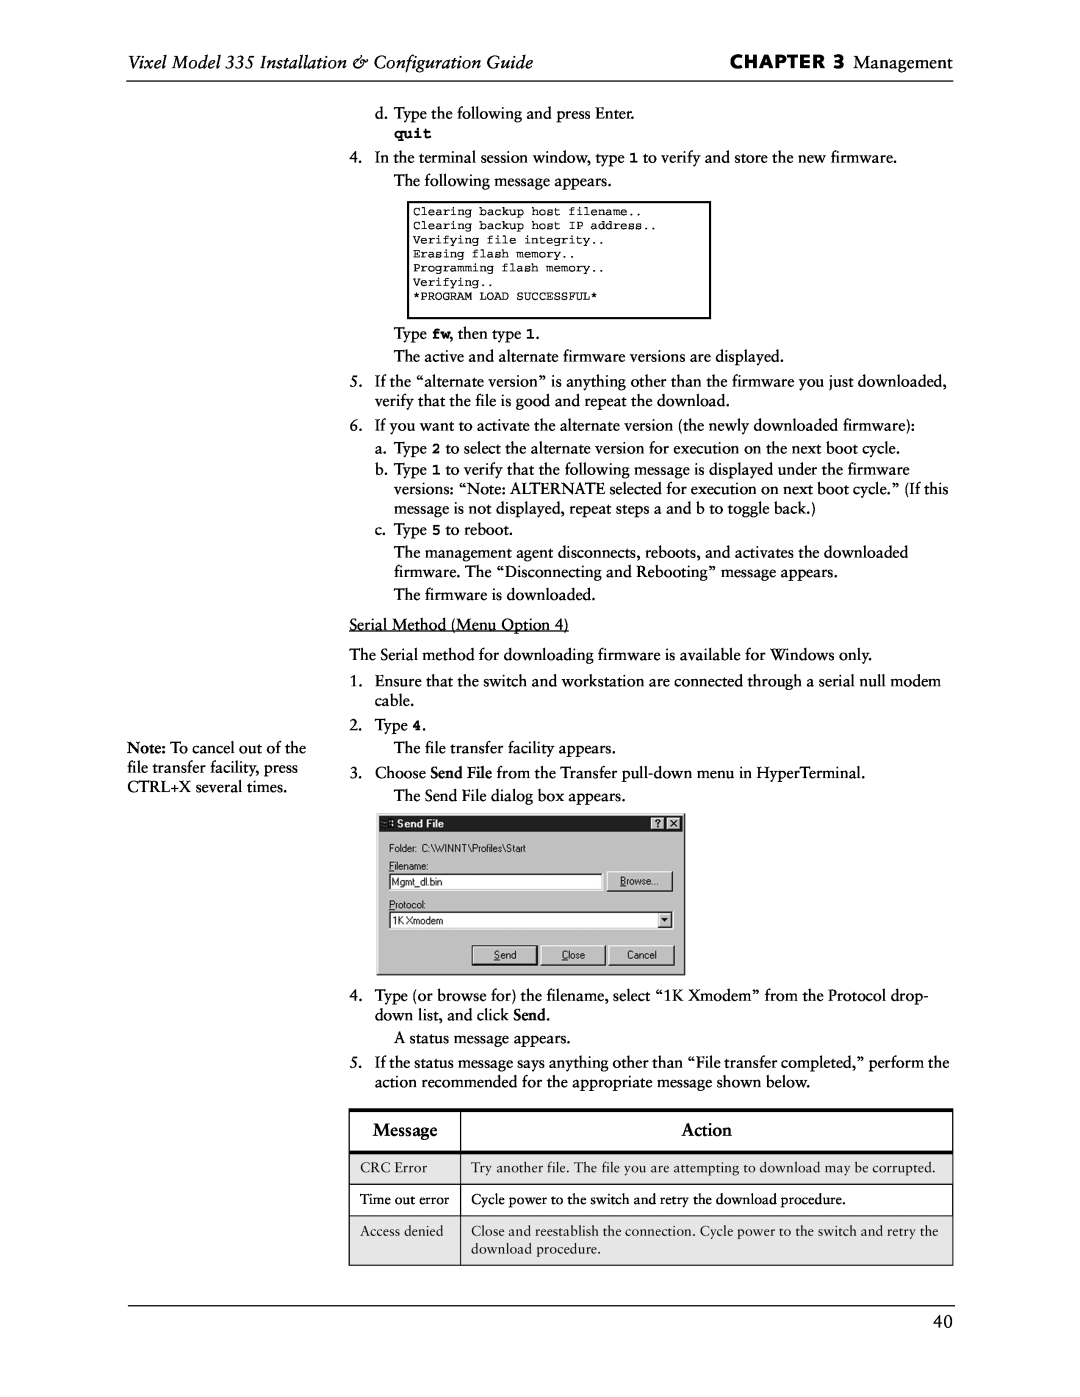 Vixel manual Management, Vixel Model 335 Installation & Configuration Guide, Message, Action 